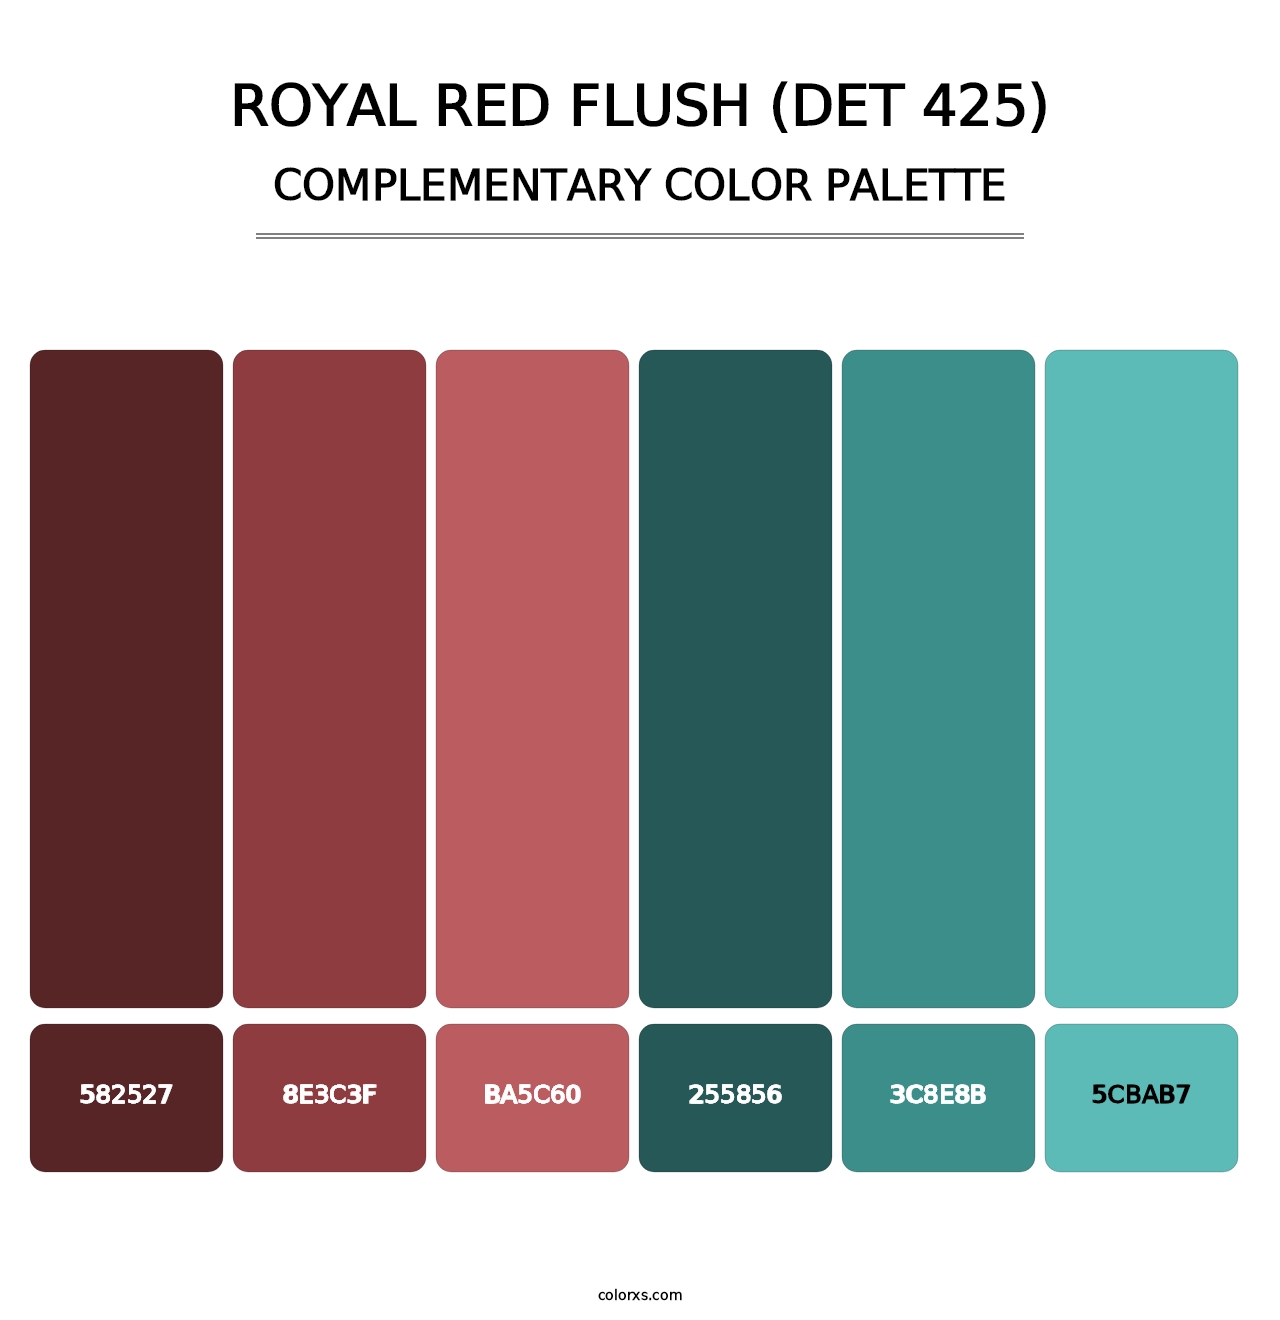 Royal Red Flush (DET 425) - Complementary Color Palette